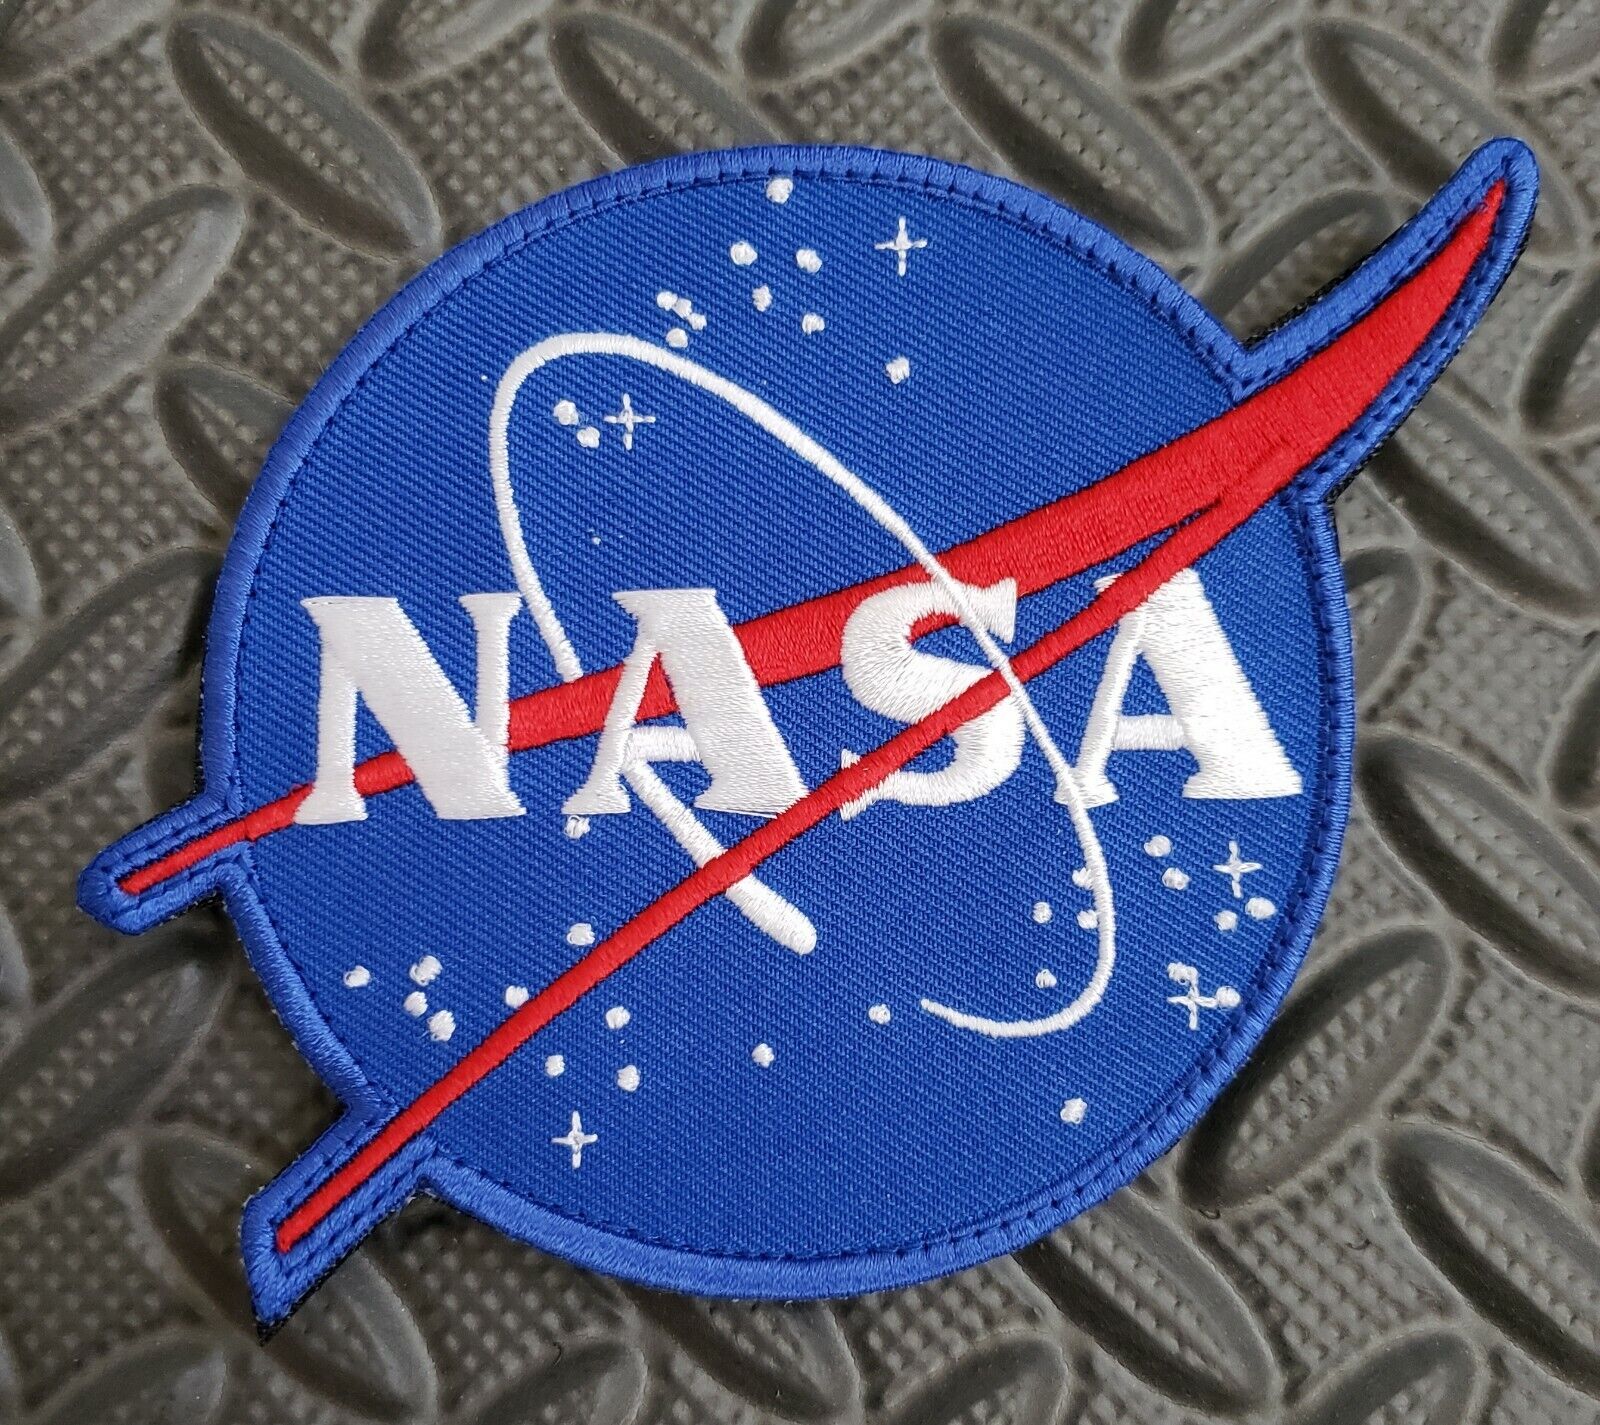 NASA Meatball Patch w/ Hook Backing - Space / Rocket / Moon / Astronaut 